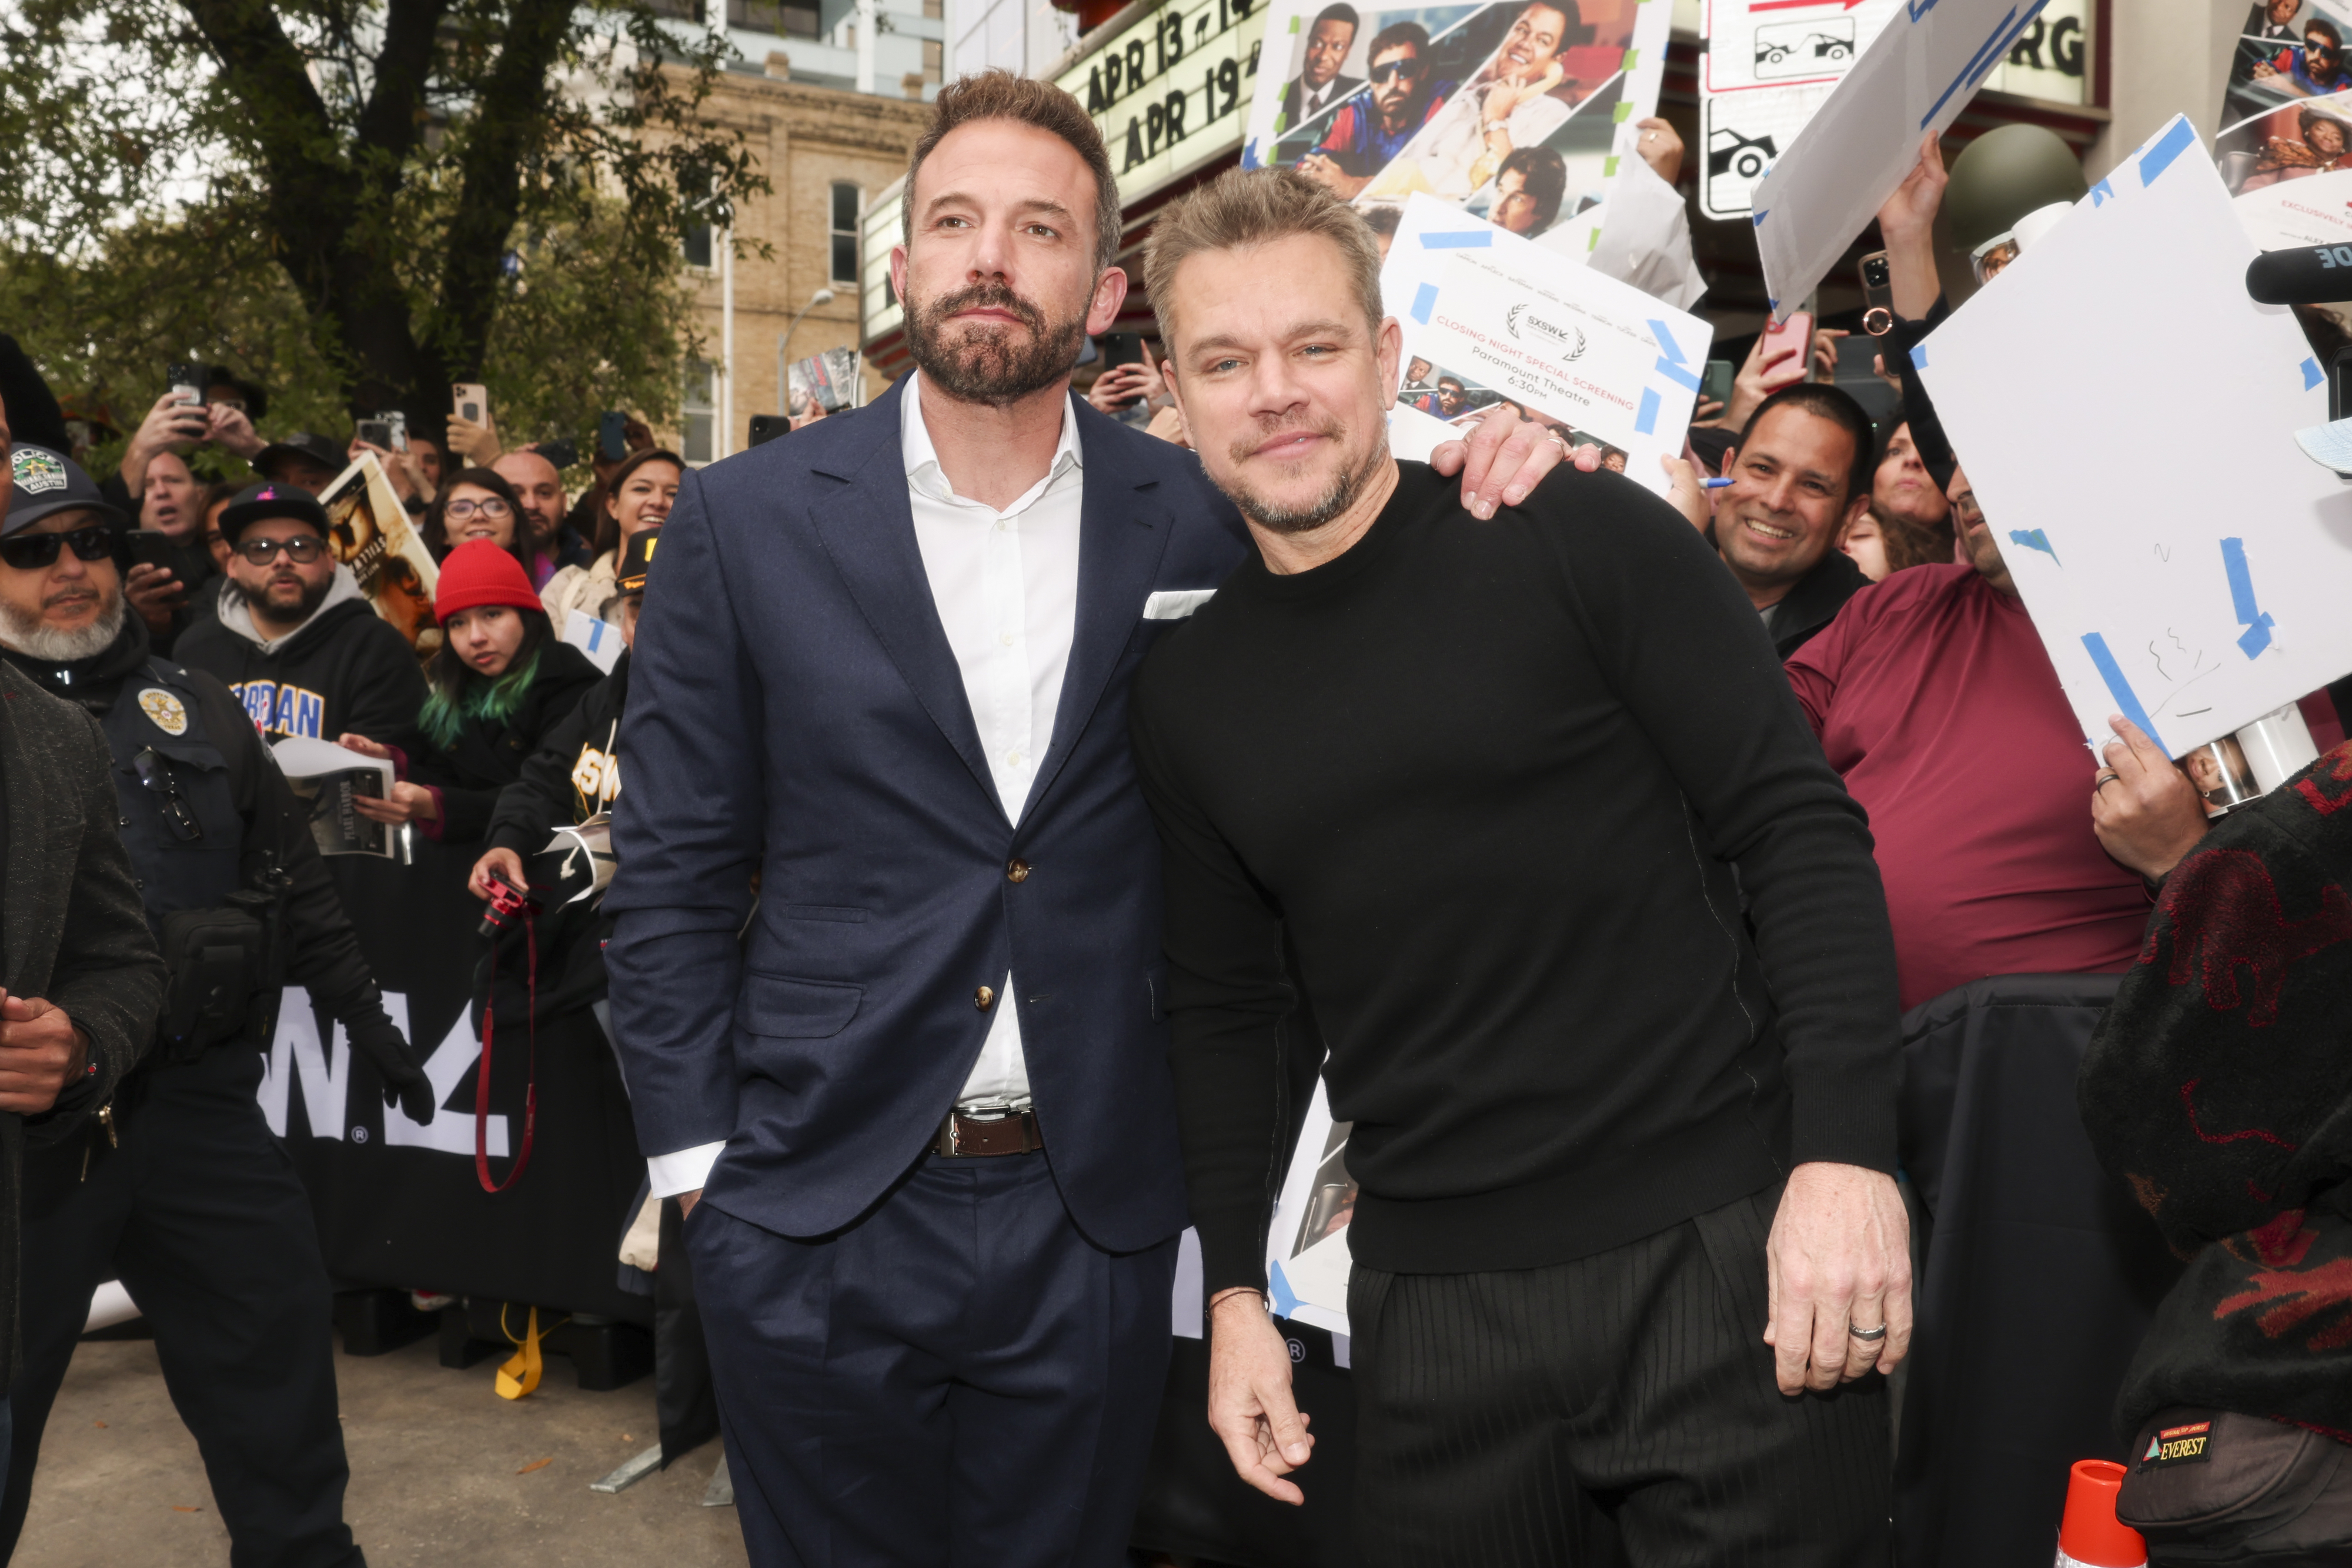 Ben and Matt standing together at a public event